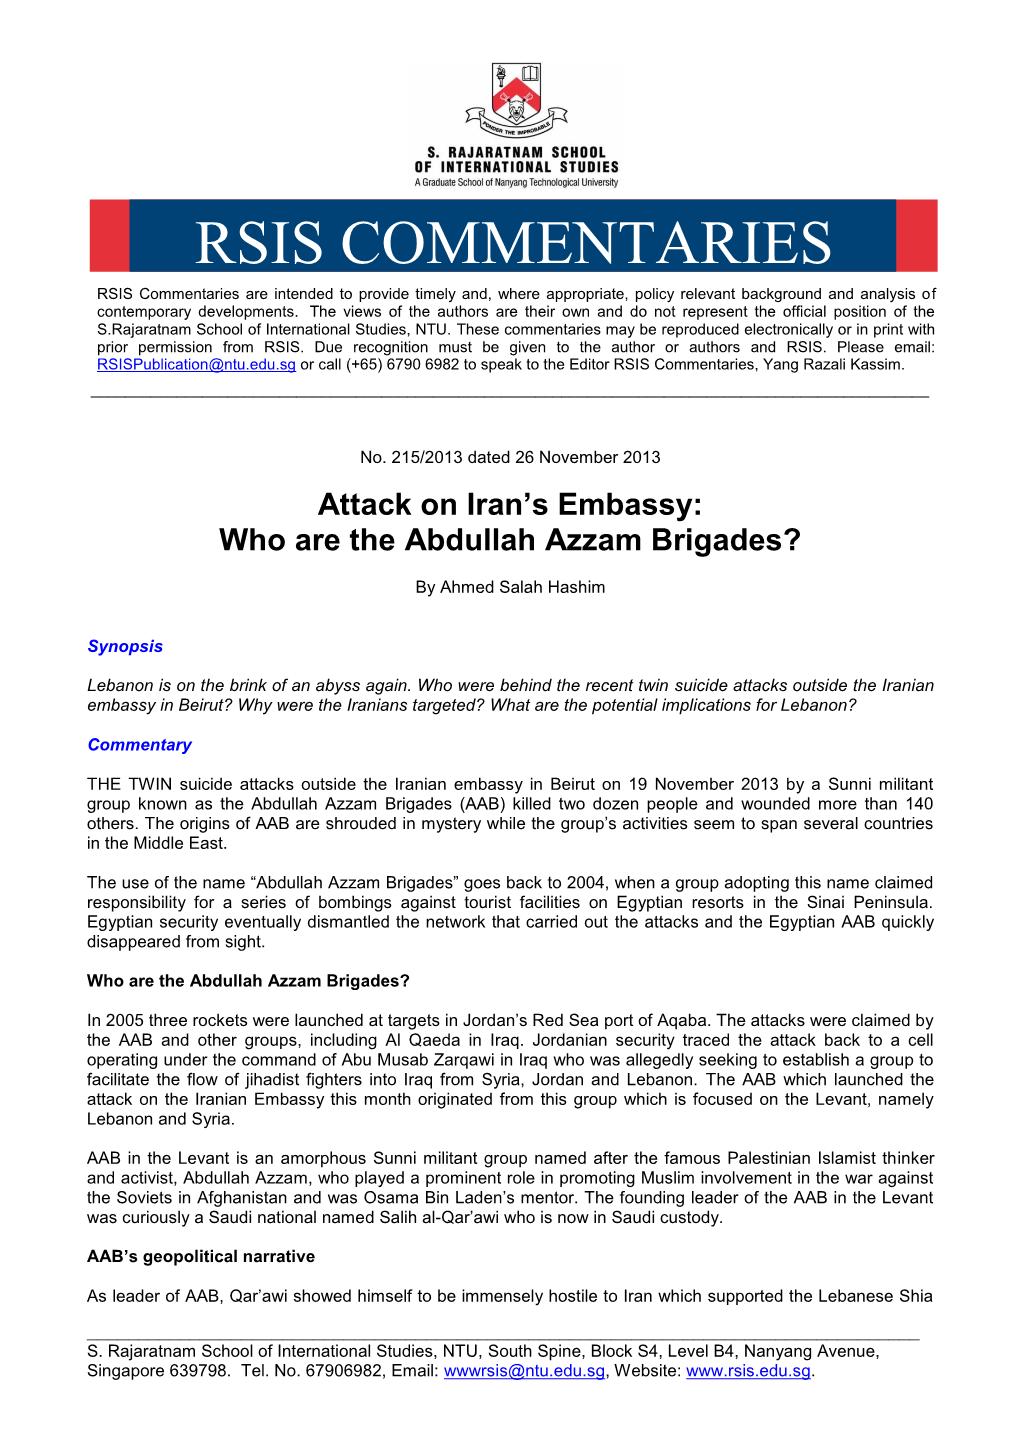 Attack on Iran's Embassy: Who Are the Abdullah Azzam Brigades?